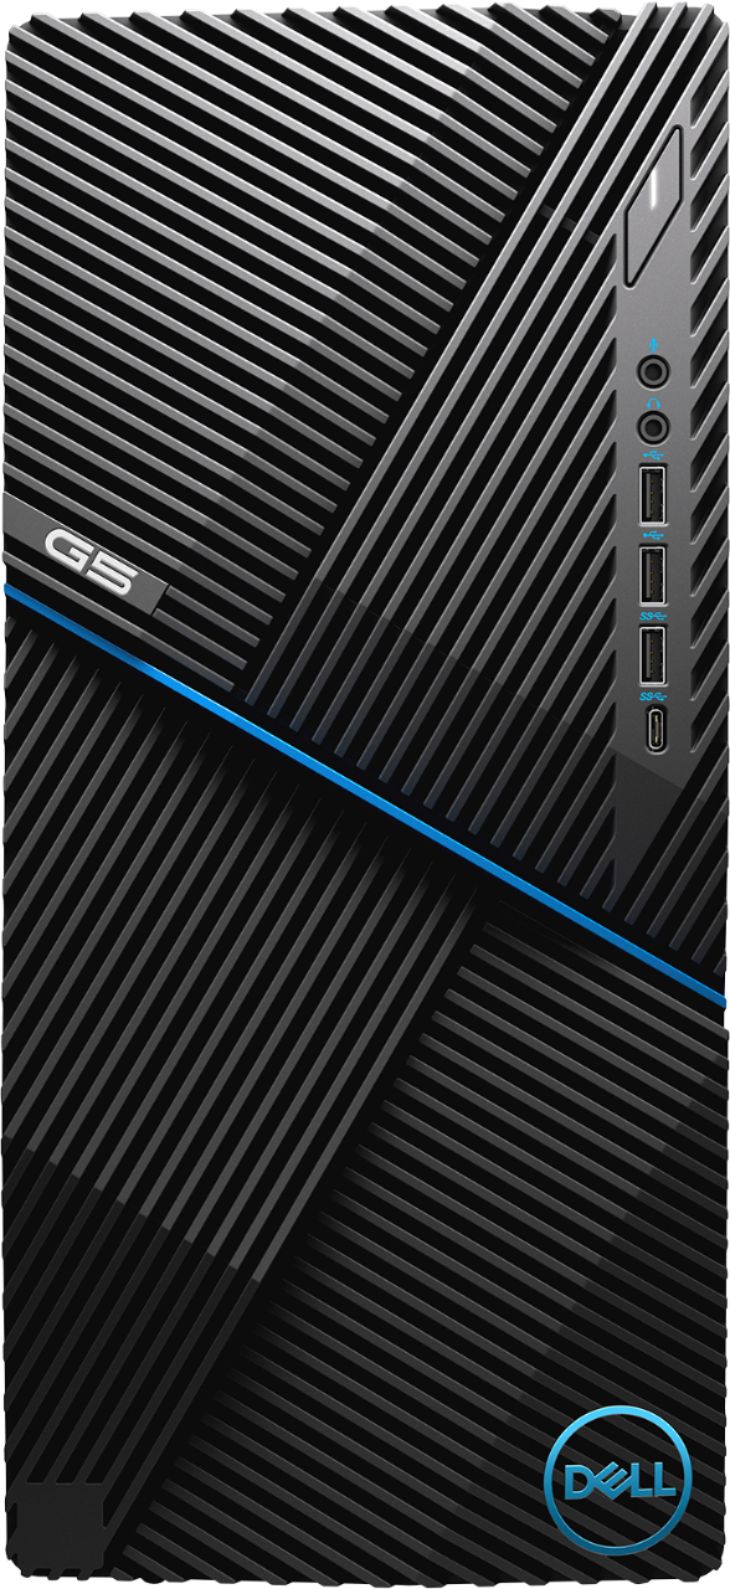 Best Buy: Dell G5 Gaming Desktop Intel Core i5-10400F 8GB Memory